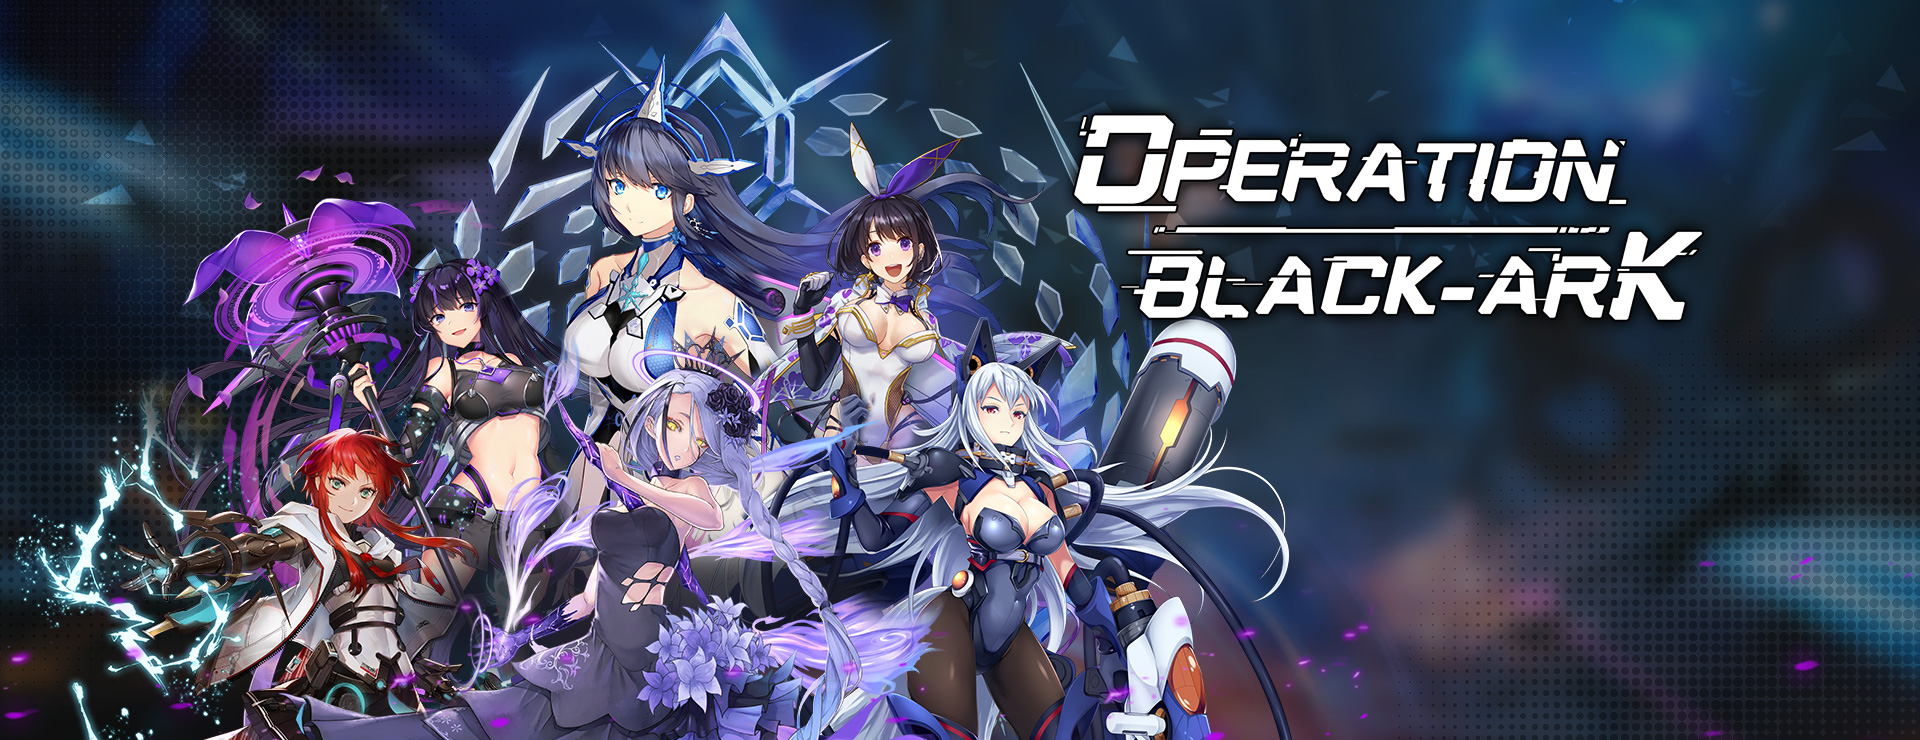 Operation Black-Ark - SLG ゲーム